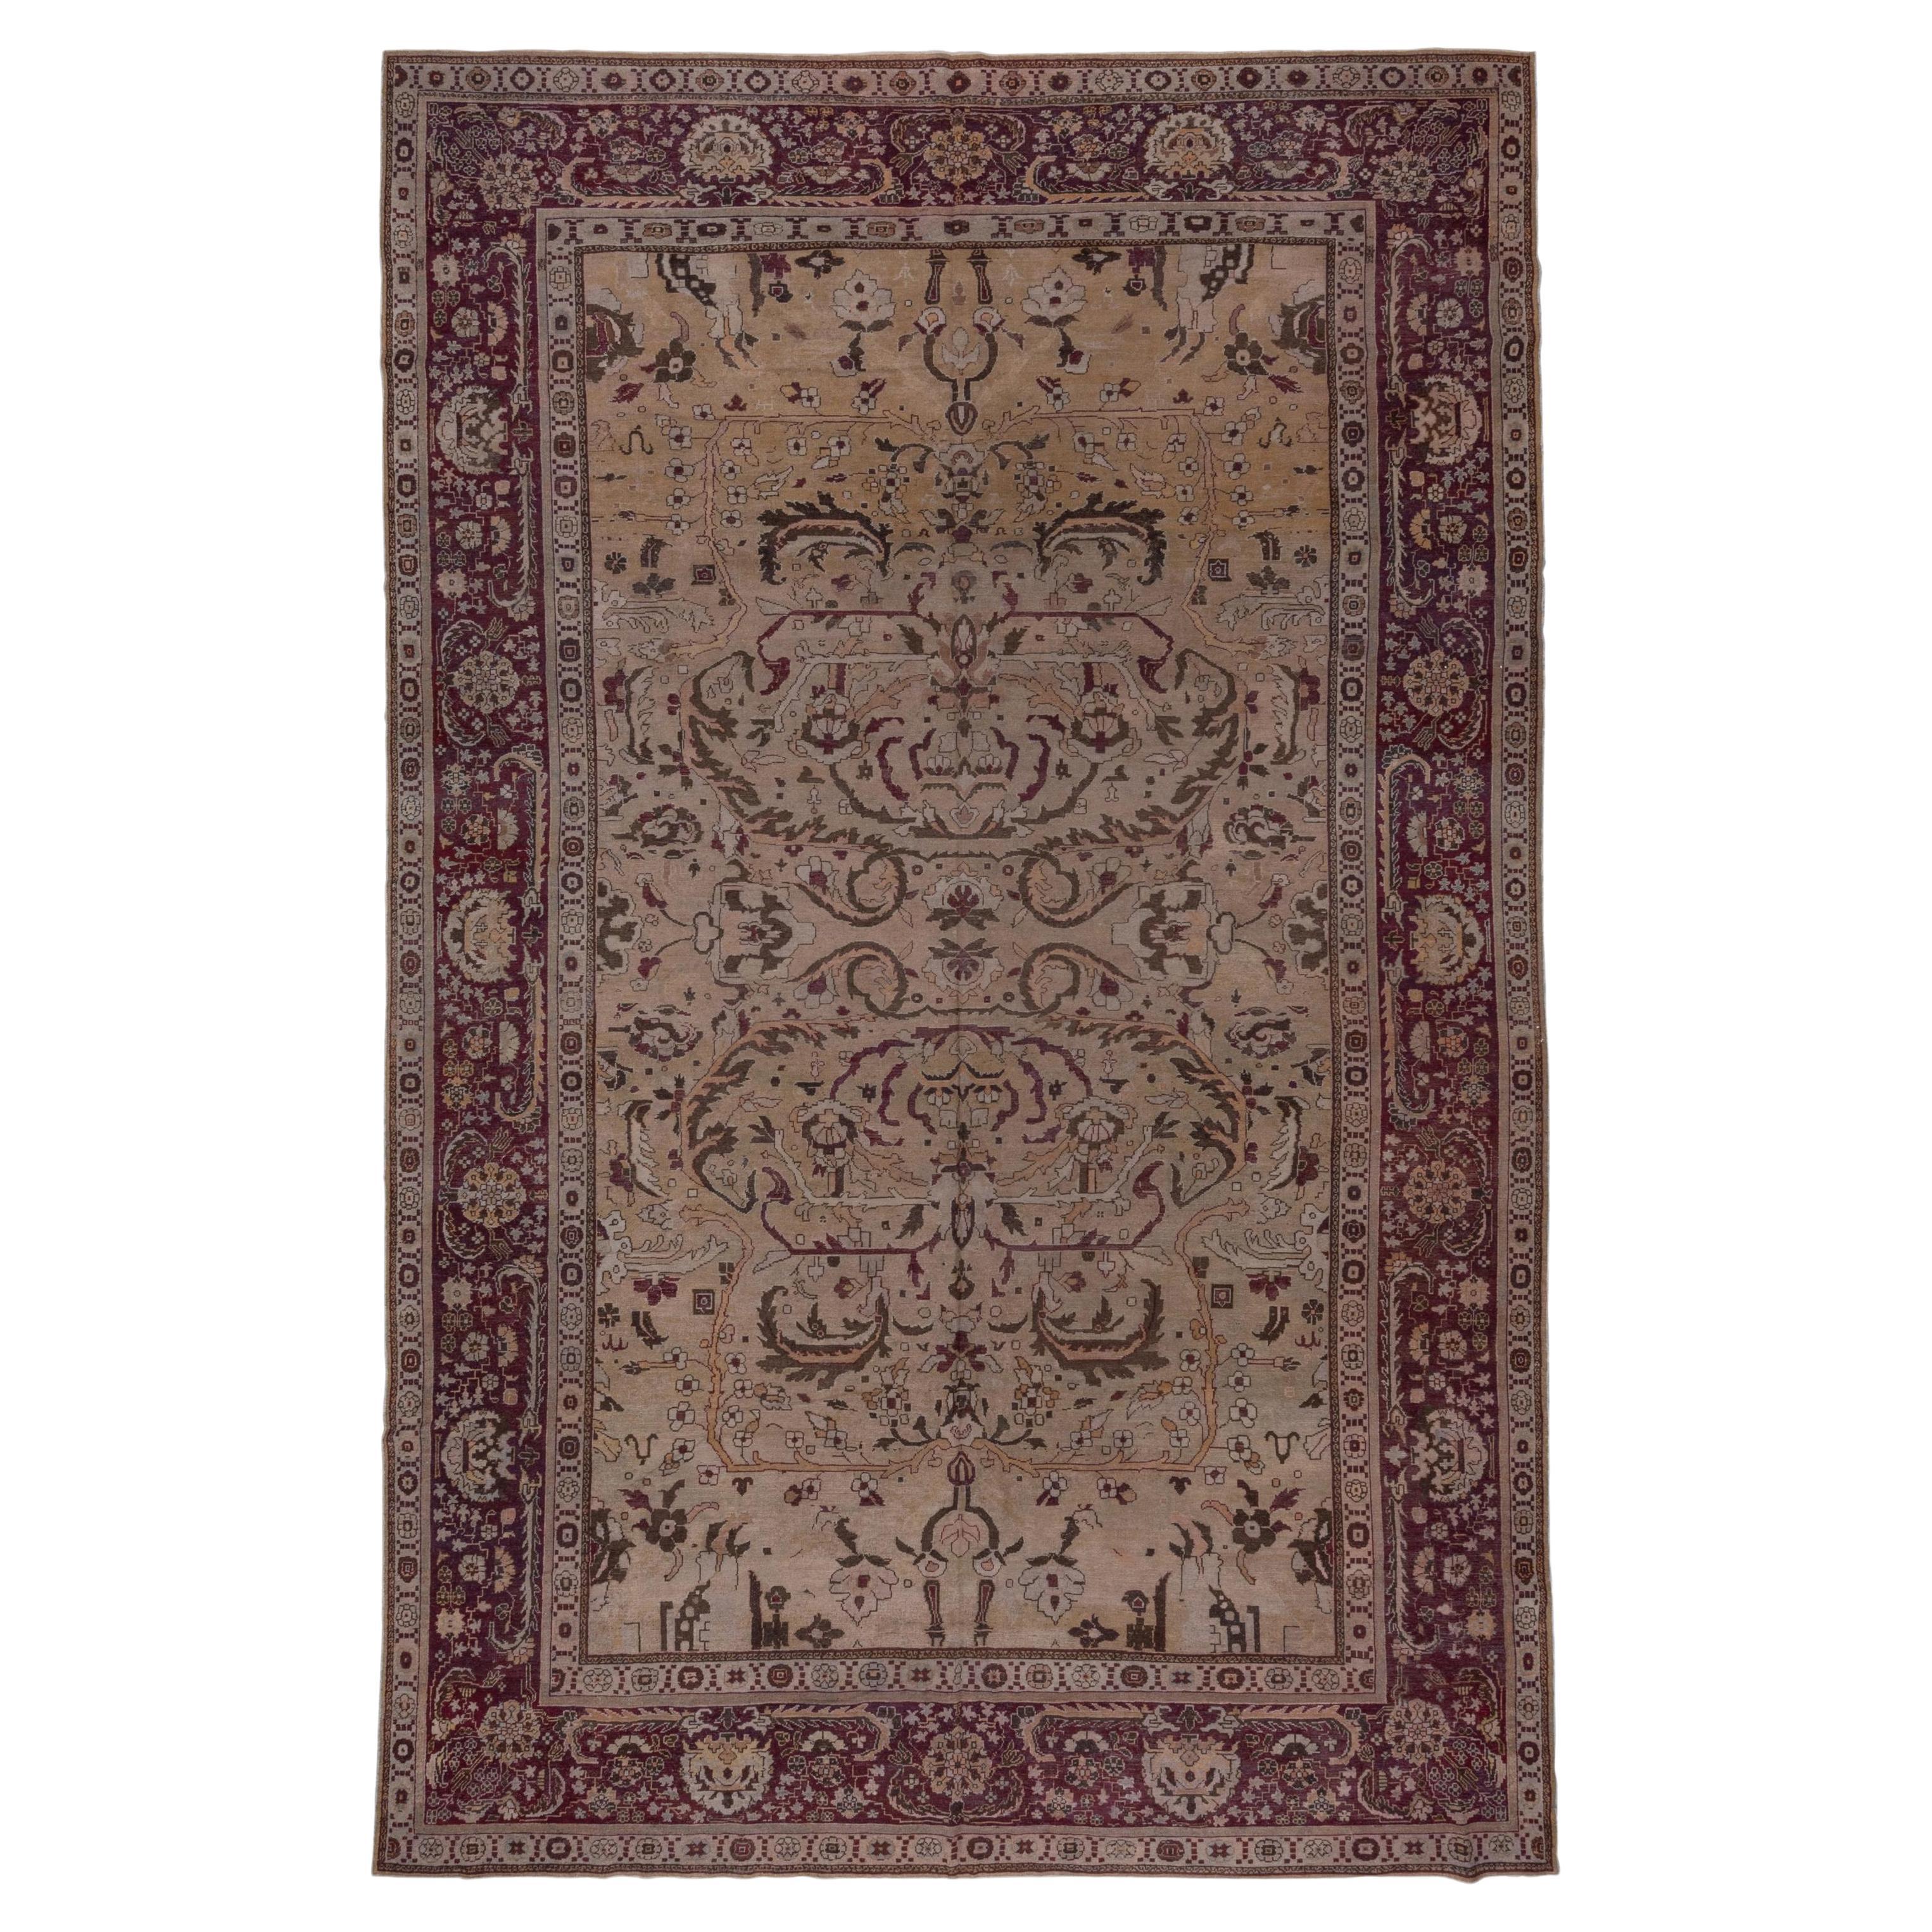 Antique Indian Amritsar Carpet, circa 1920s For Sale